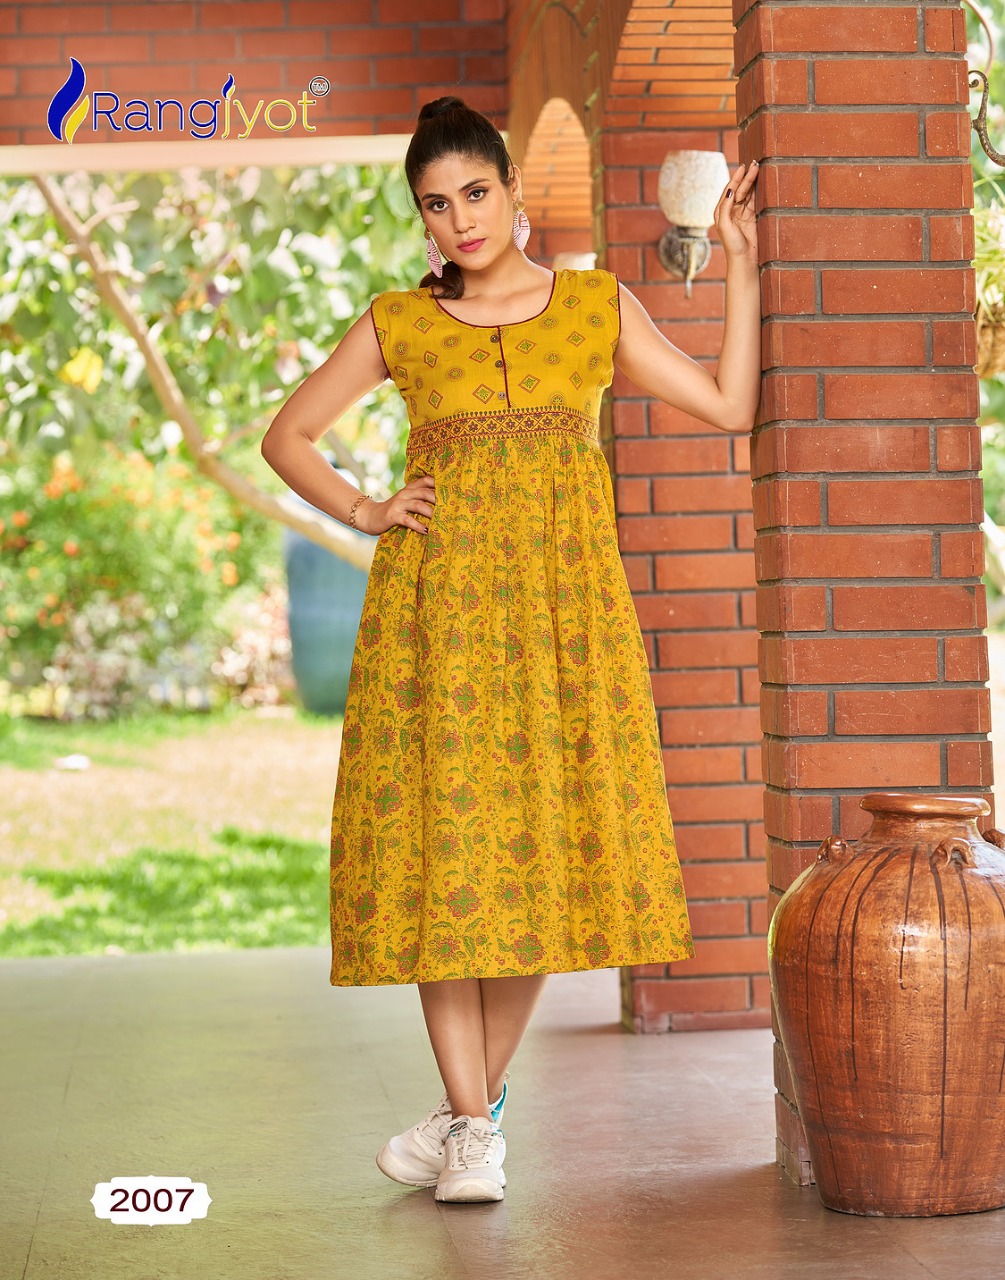 925046400rangjyot summer queen 2 new fancy cotton printed ethnic wear designer kurti collection1%20(7)